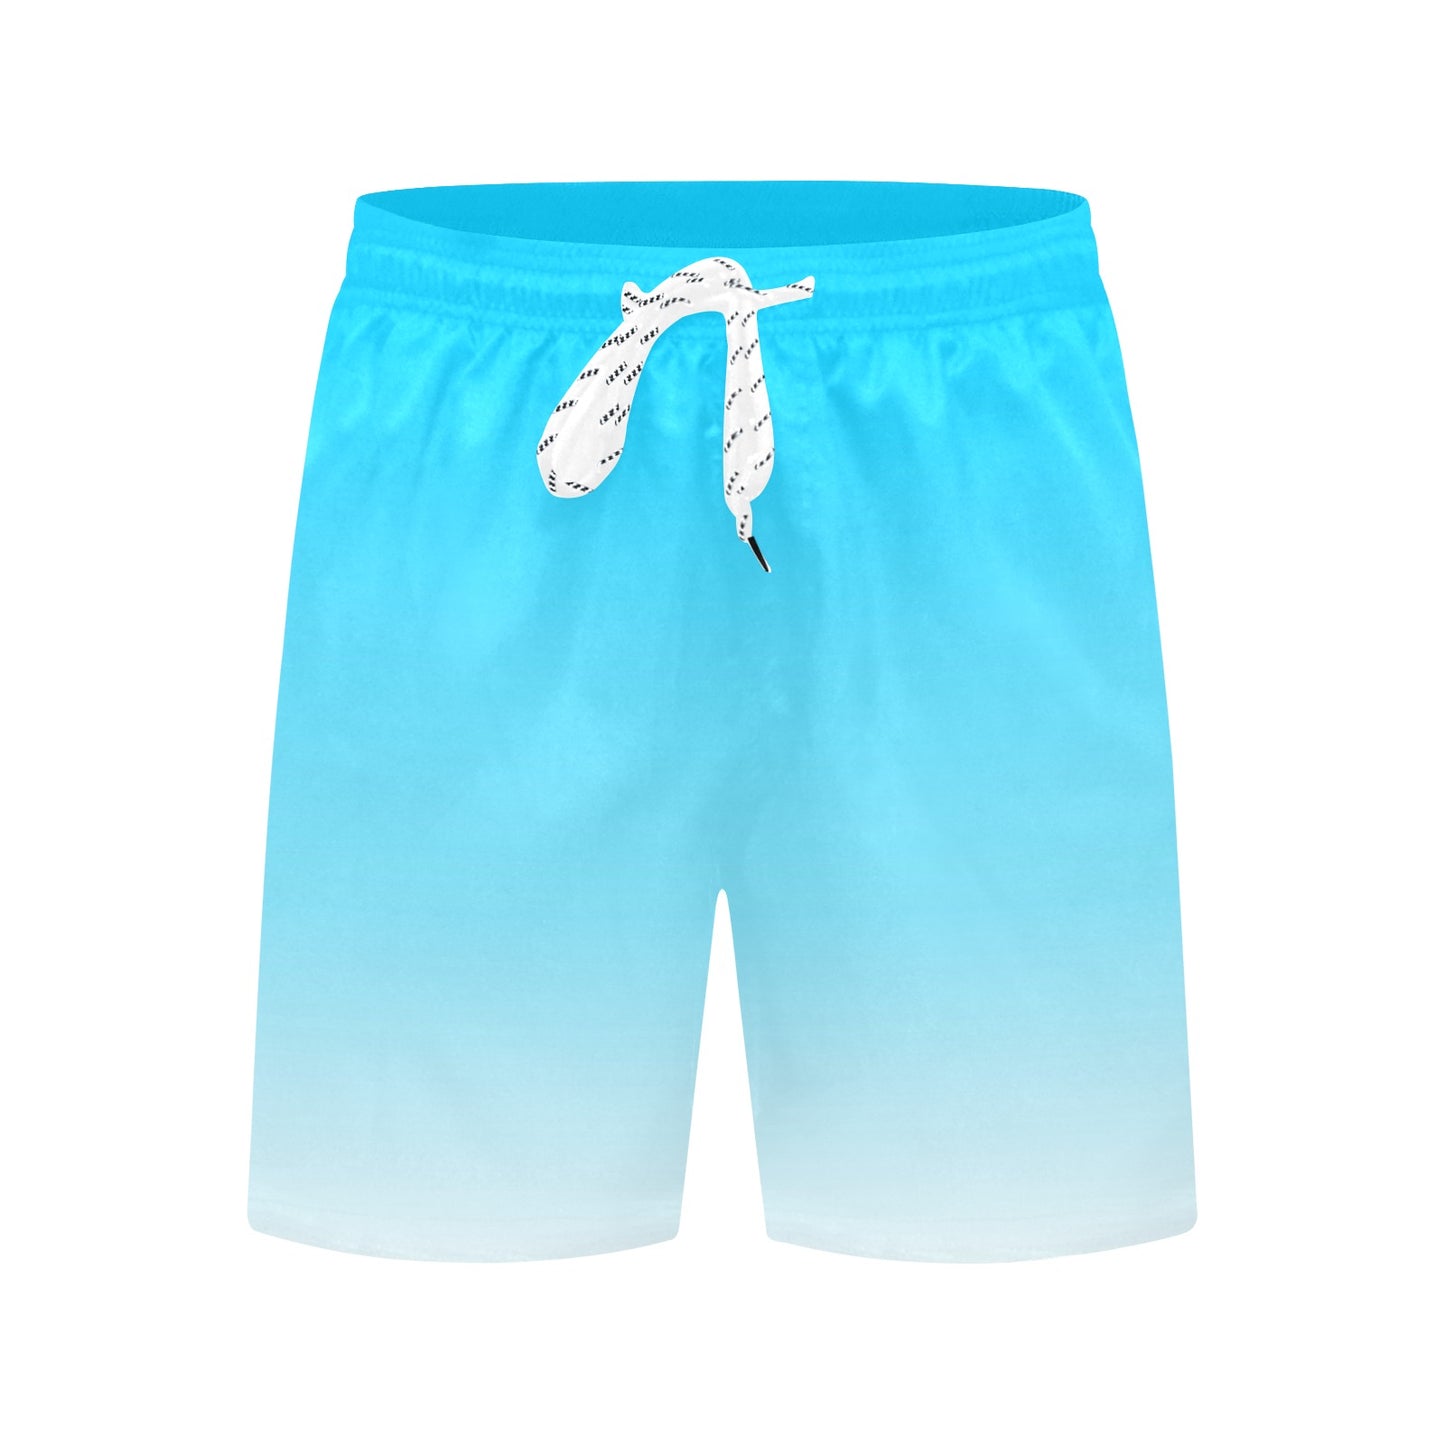 Blue Ombre Men Swim Trunks, Mid Length Shorts Aqua Beach Pockets Mesh Lining Drawstring Boys Casual Bathing Suit Plus Size Swimwear